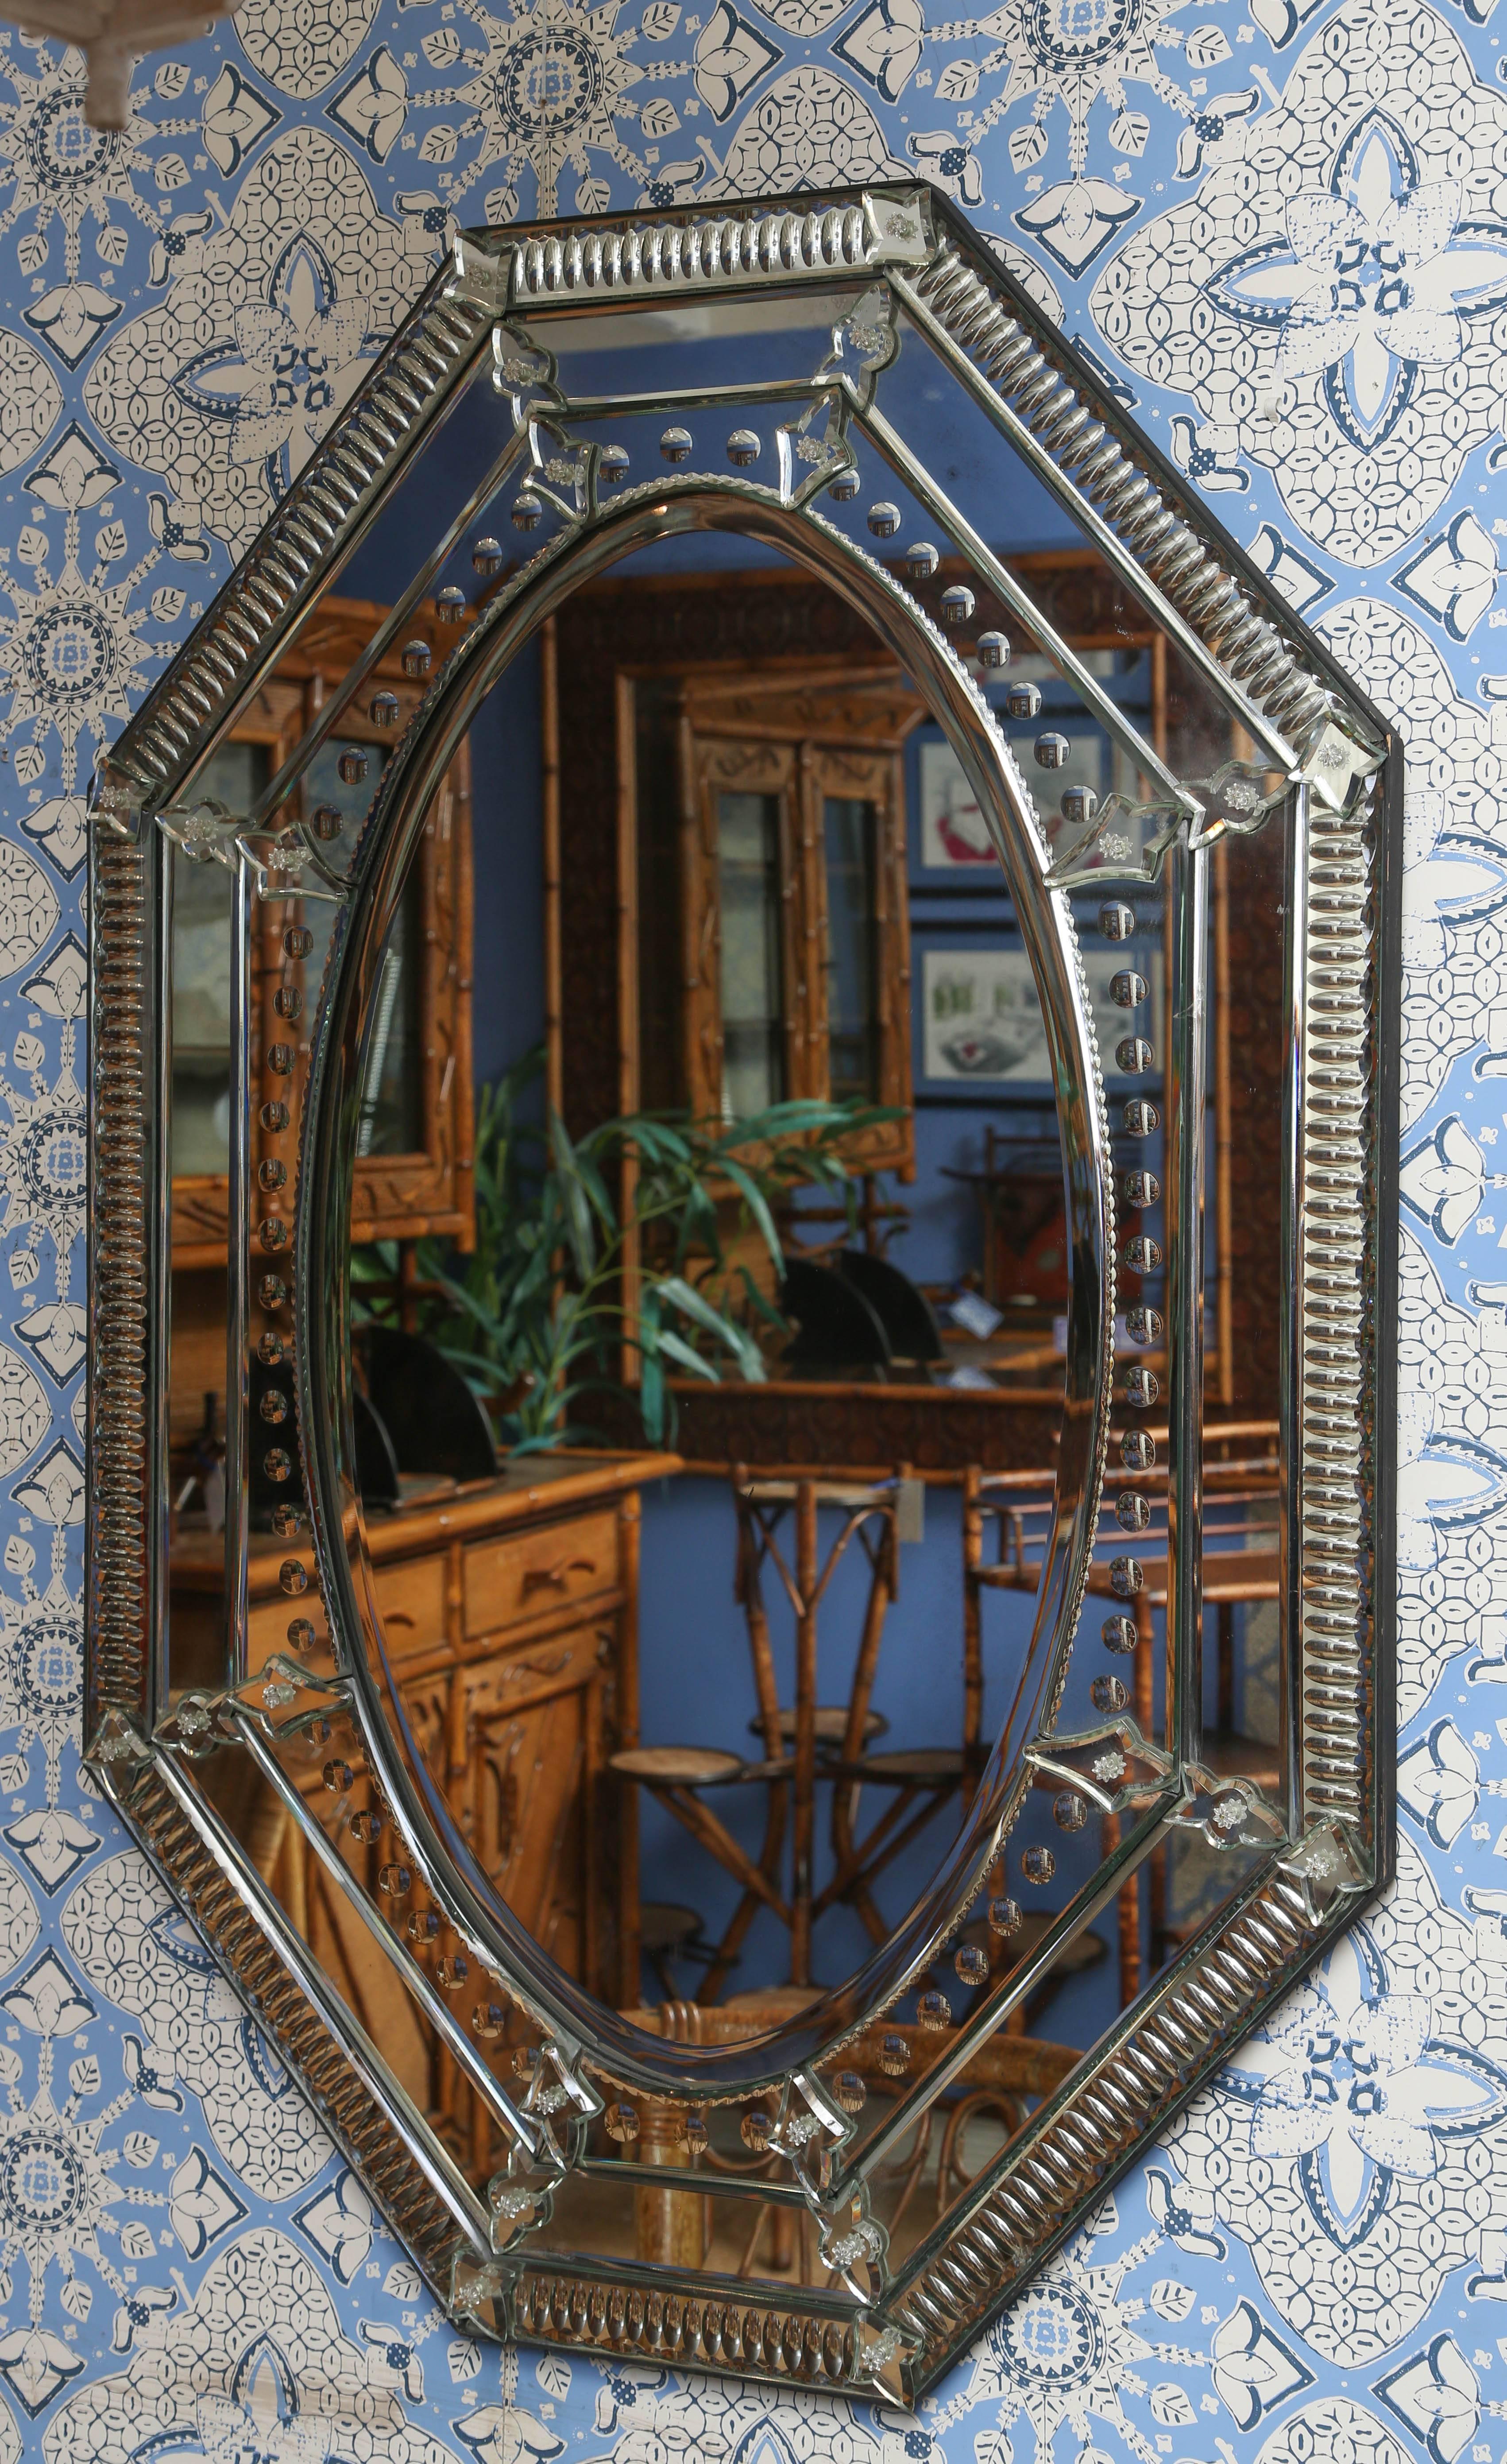 Very nice lady Venetian mirror with plenty of details.